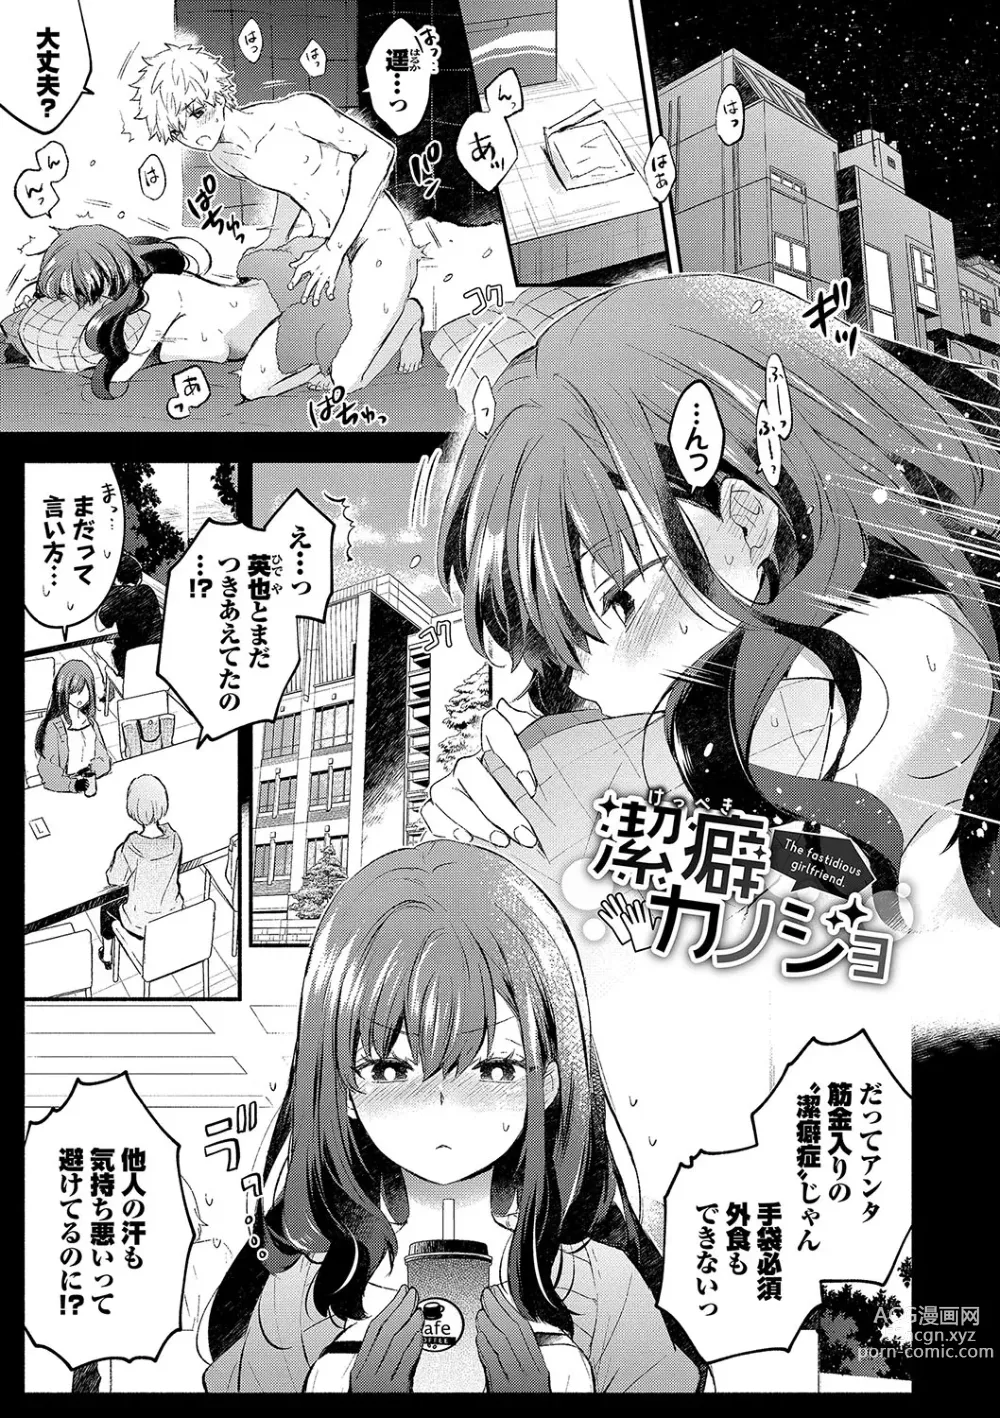 Page 4 of manga Junai Porno - Pure Love Porno